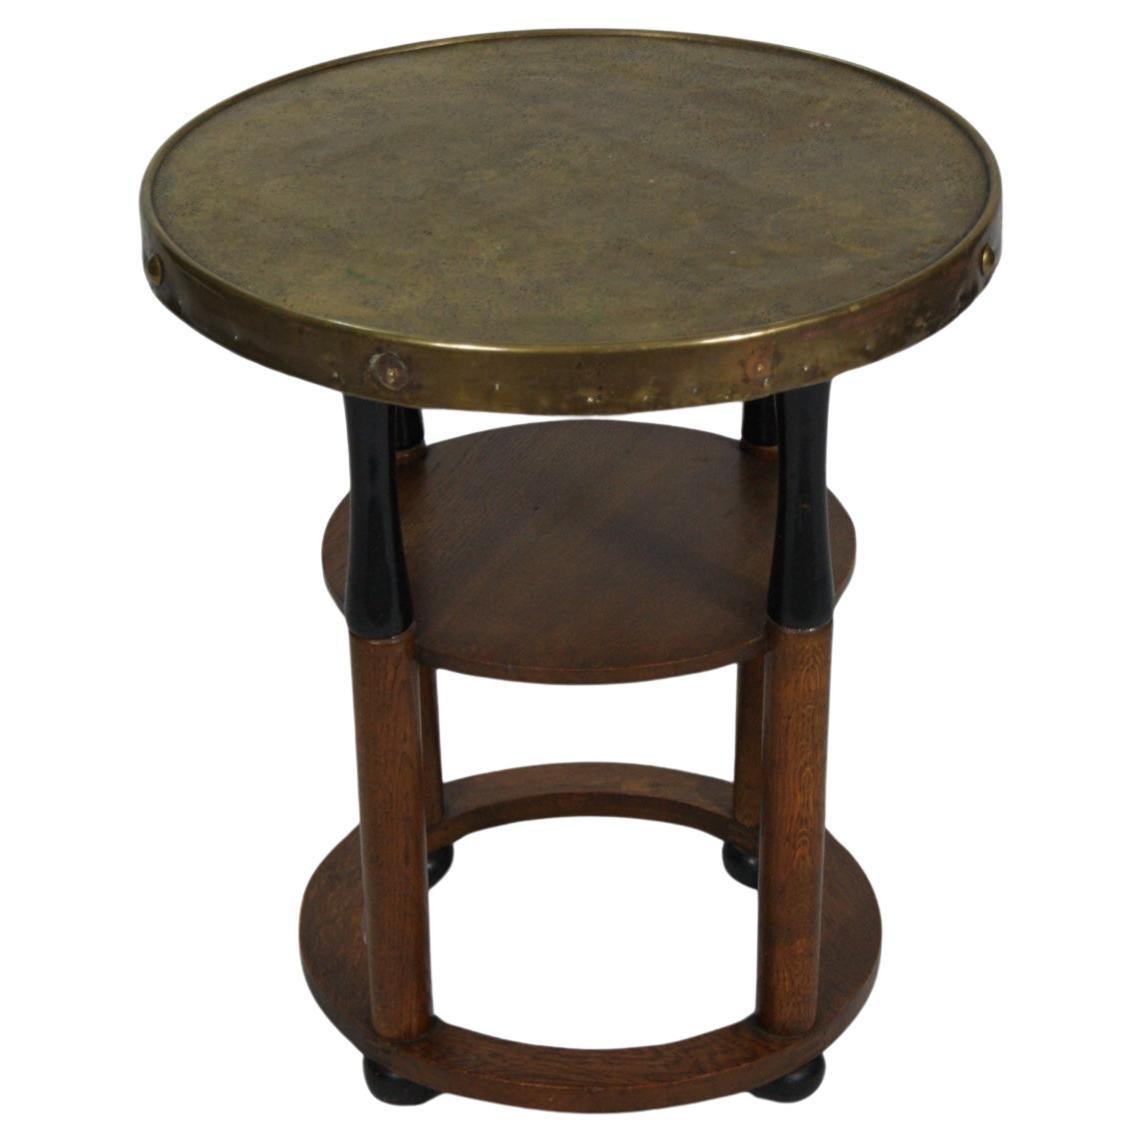 Side table, art nouveau, wood structure, brass top, early twentieth century.